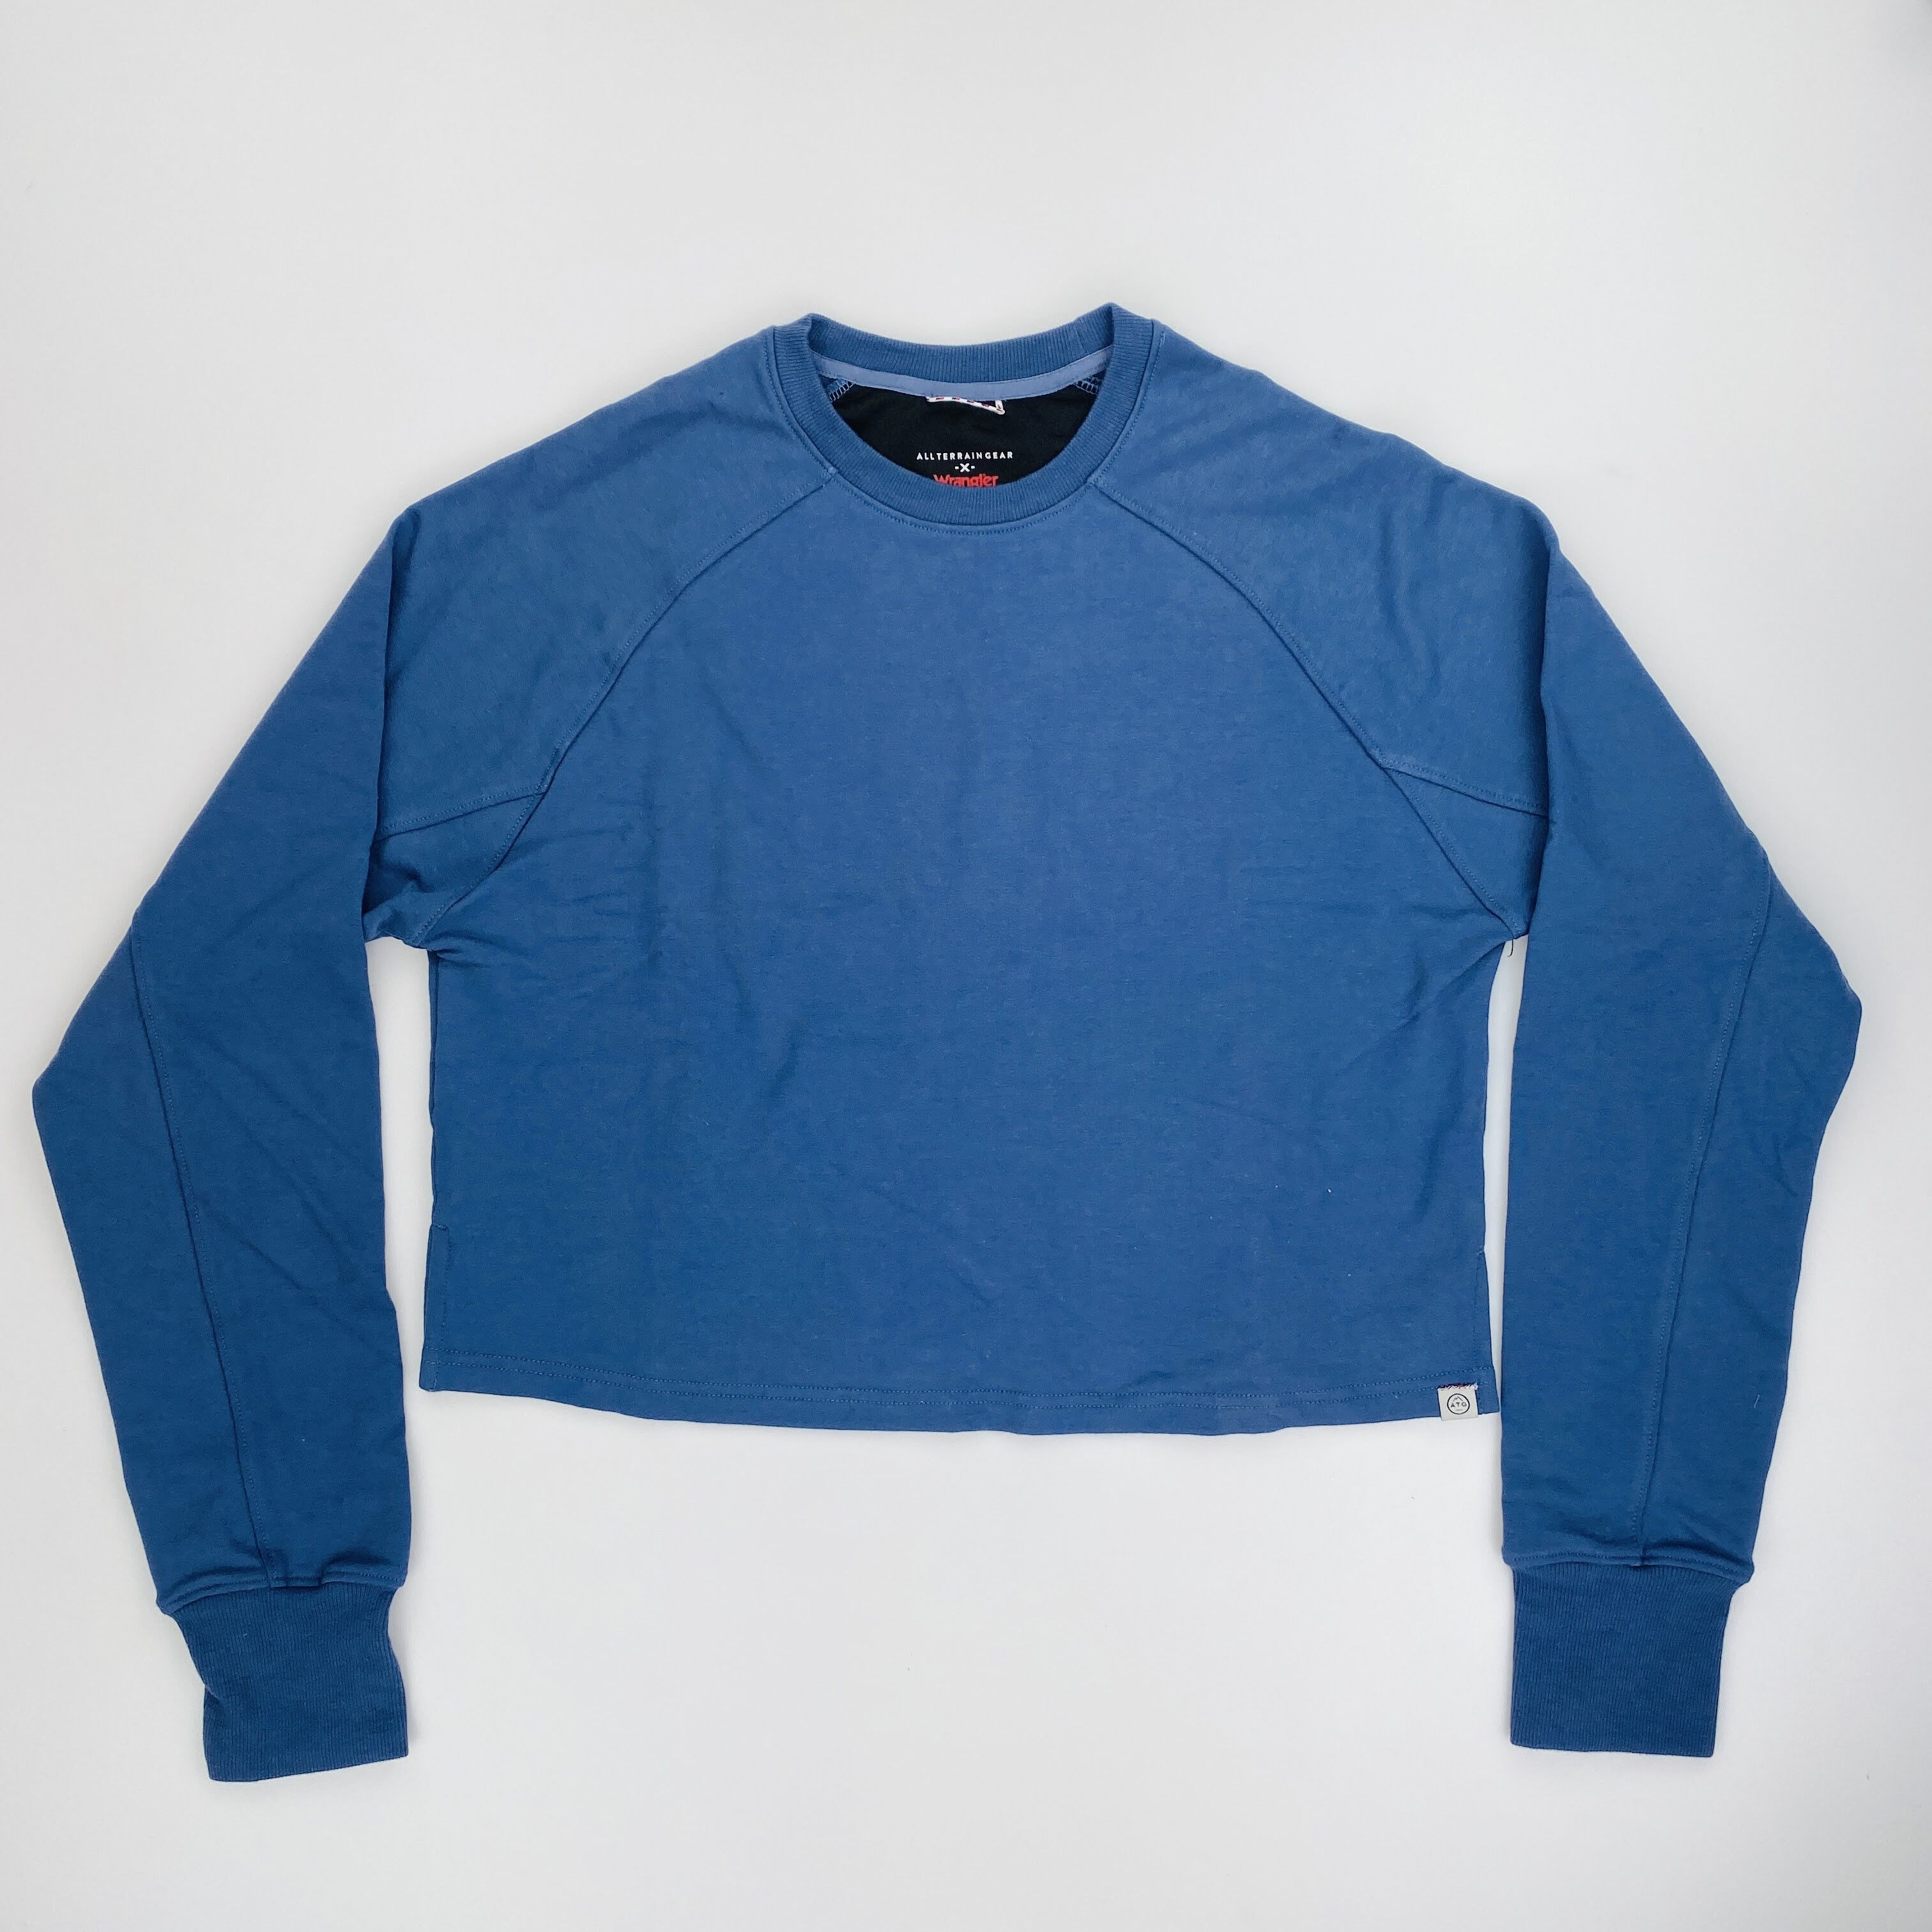 Wrangler Cropped Sweatshirt - Second Hand Hoodie - Women's - Blue - S